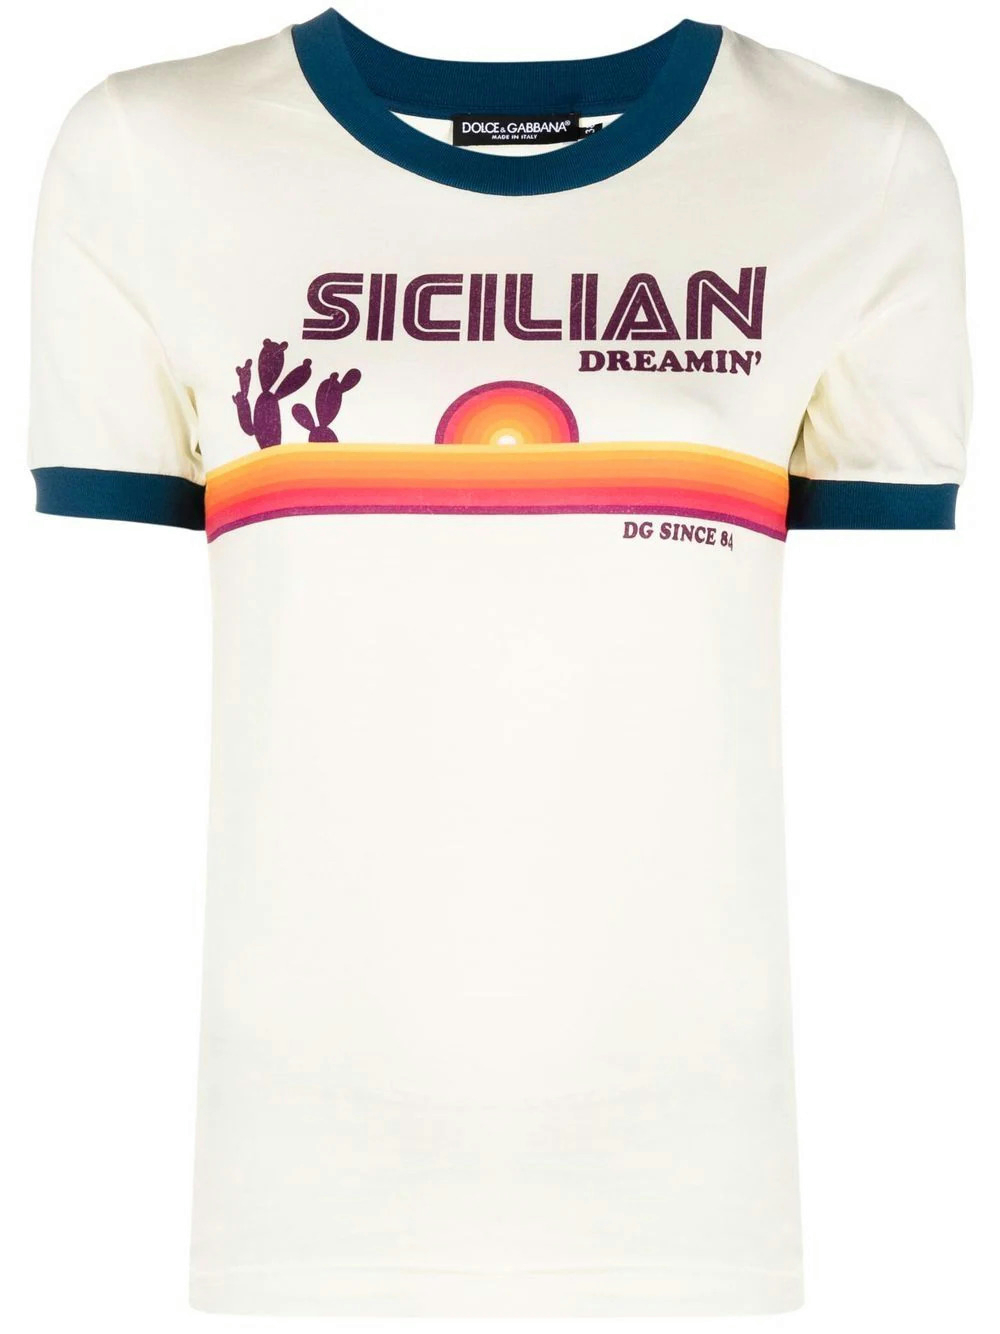 DOLCE&GABBANA - Sicilian-print crew neck T-shirt